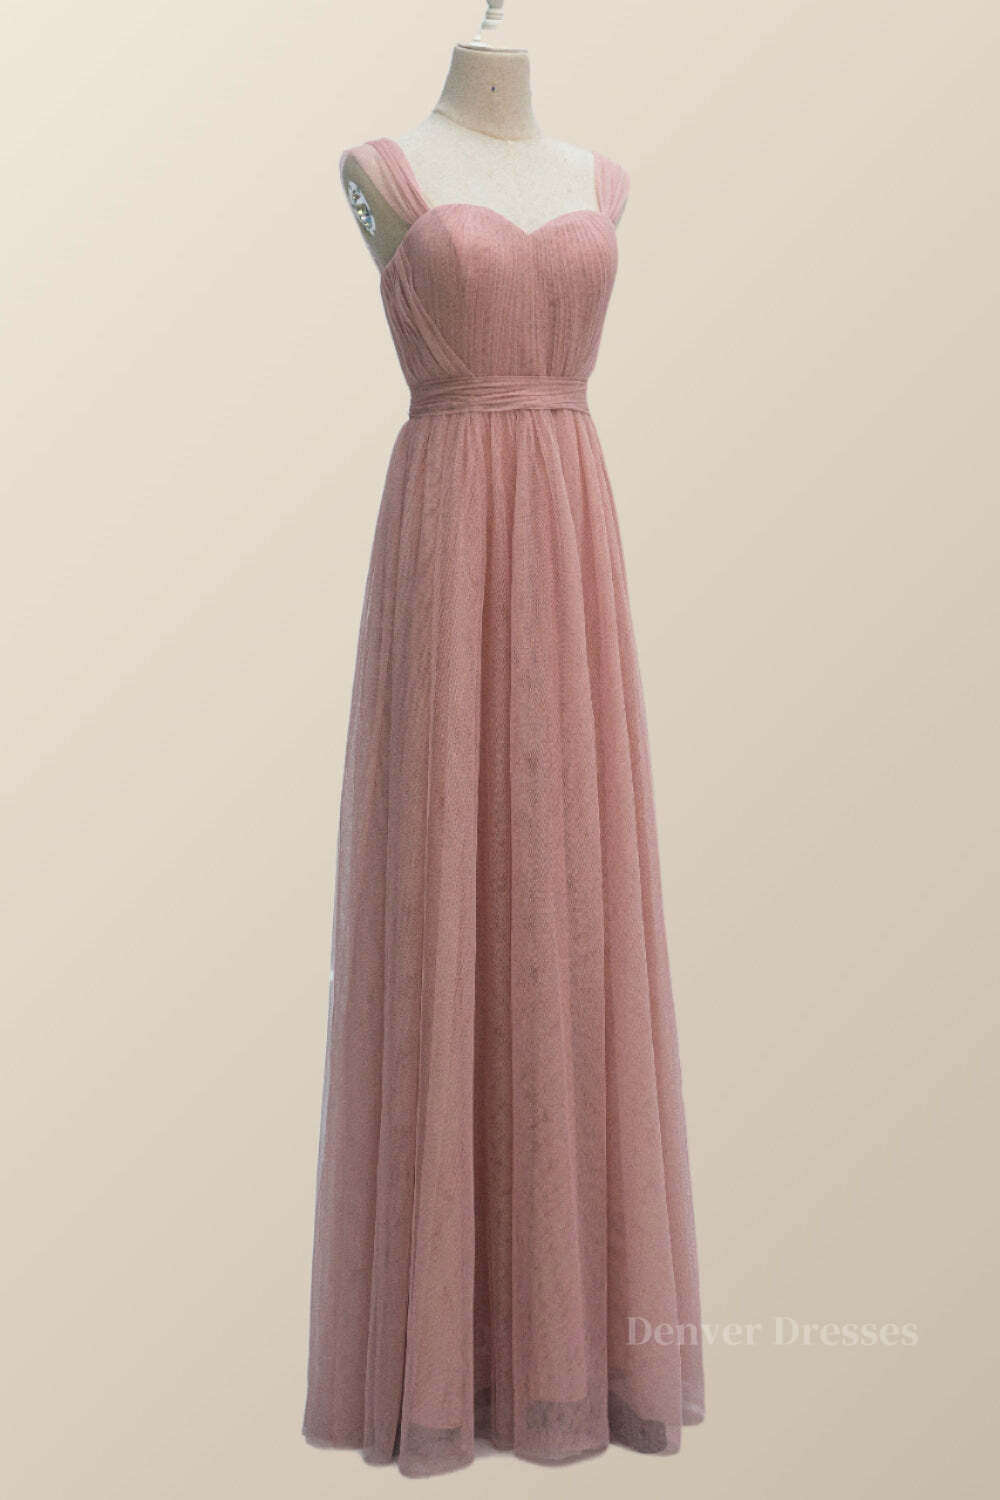 Evening Dresses Near Me, Empire Blush Pink Tulle A-line Long Bridesmaid Dress